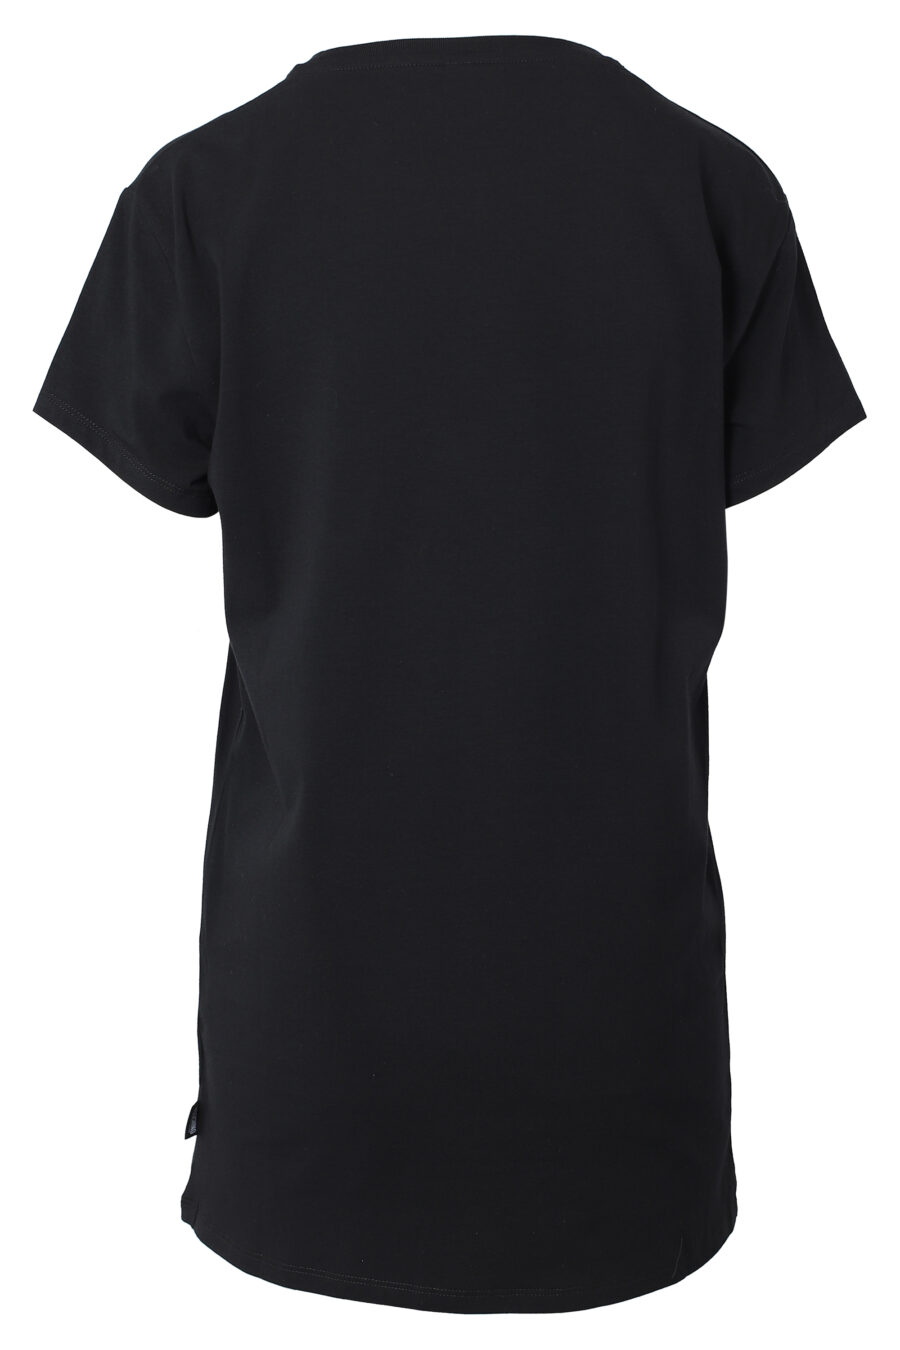 Camiseta maxi negra con minilogo oso underbear - IMG 9808